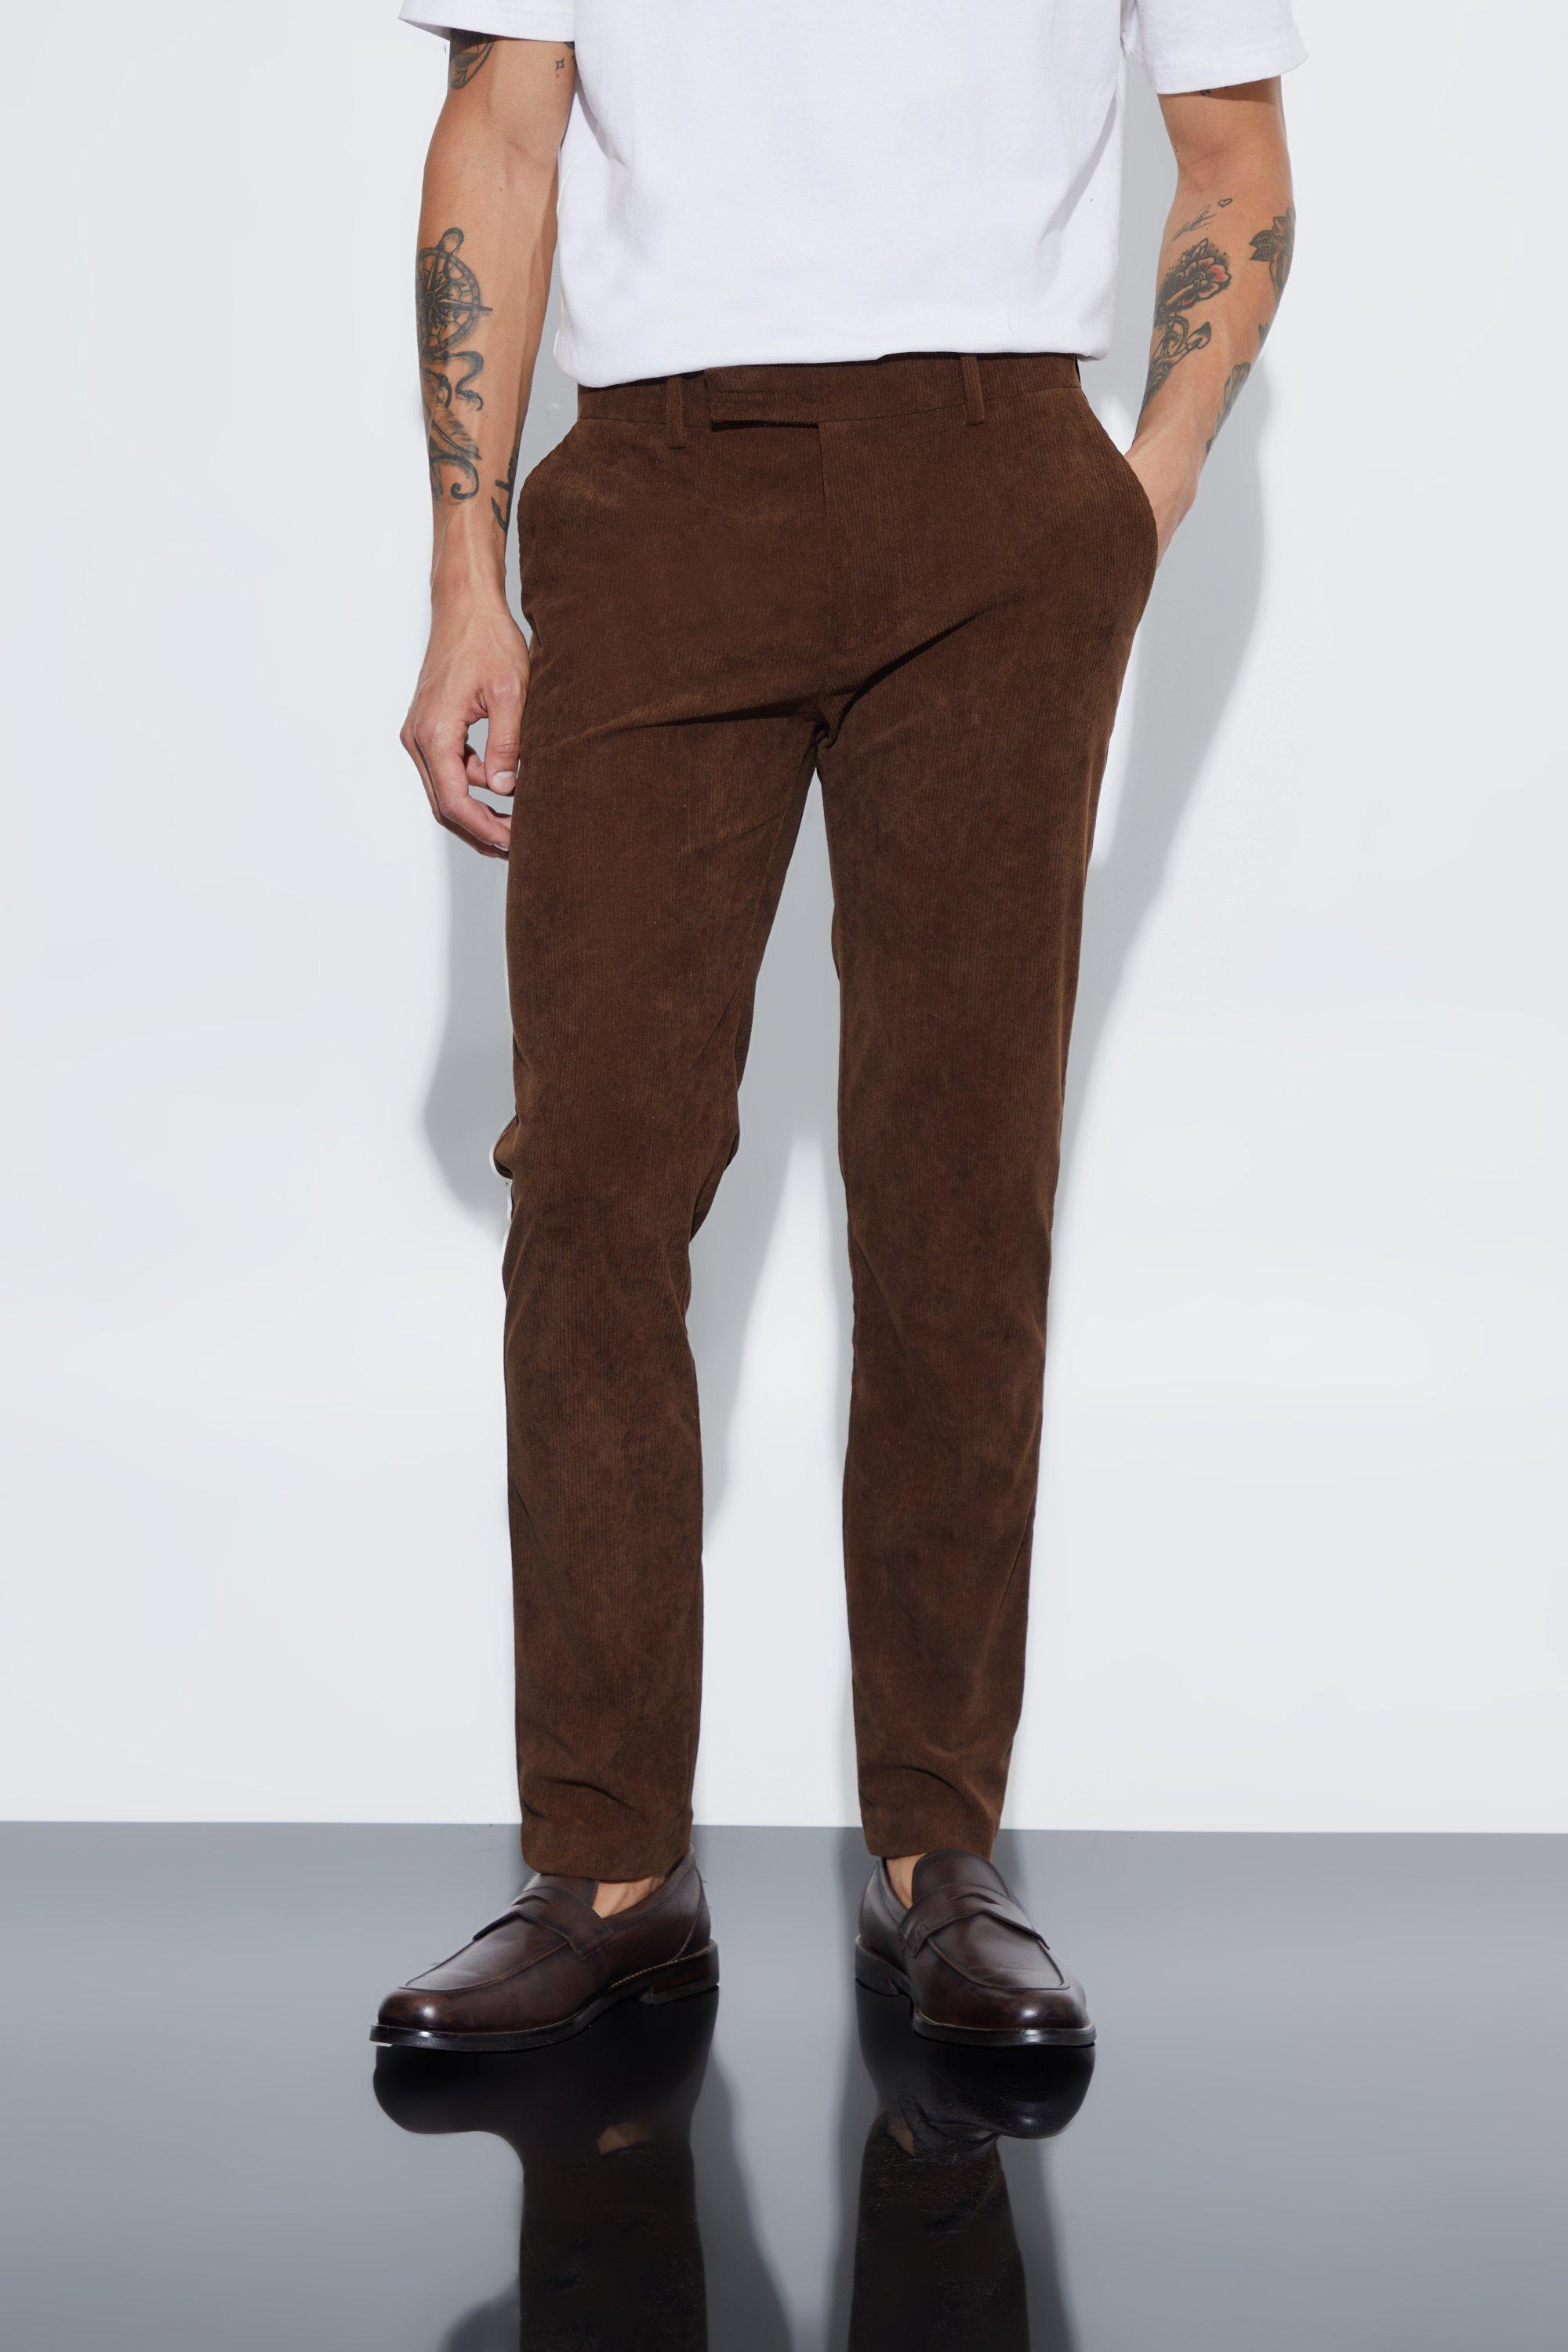 pantalon de tailleur skinny homme - brun - 30, brun